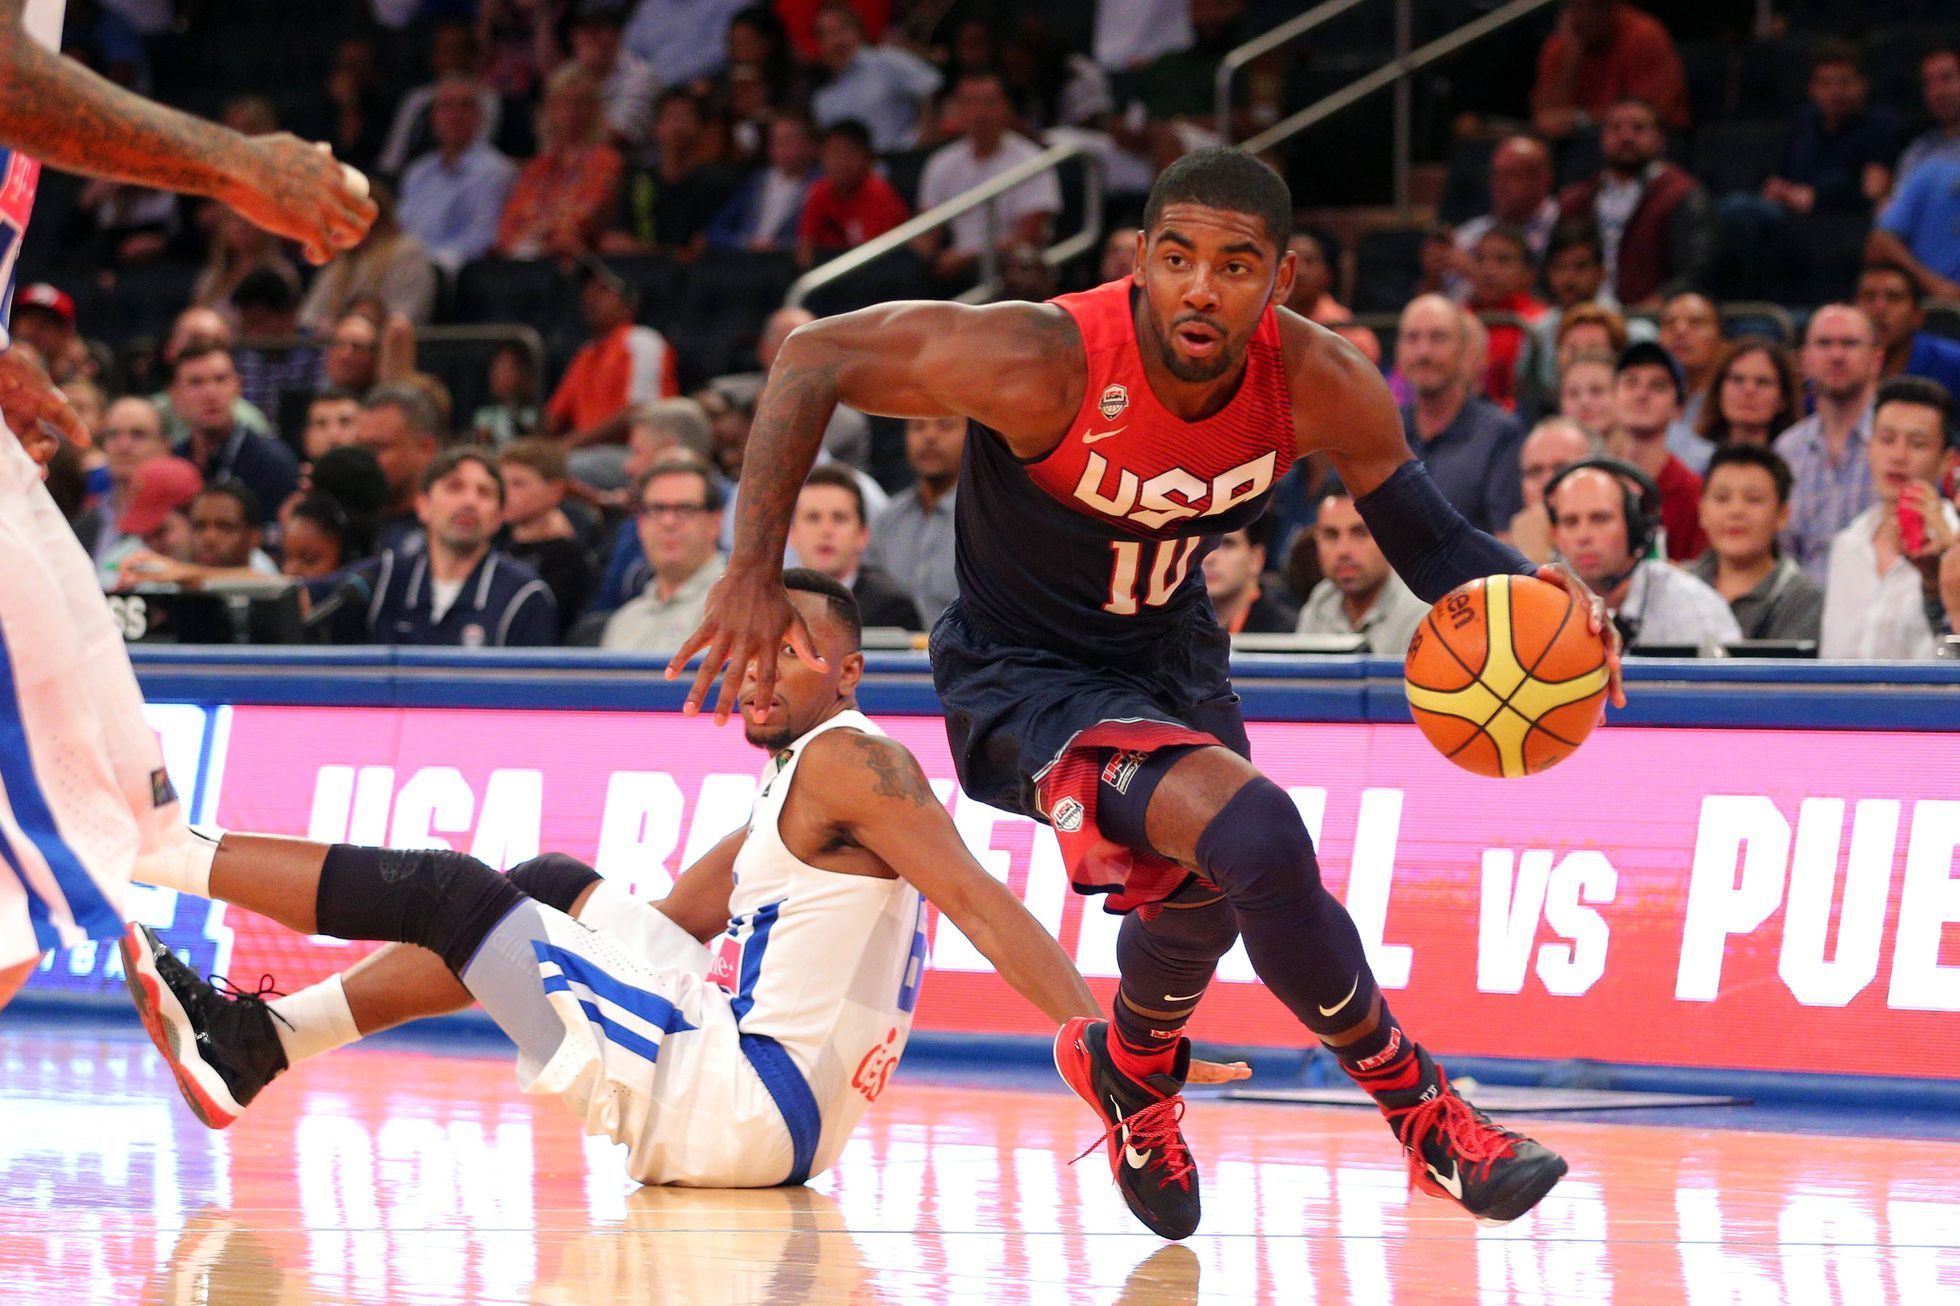 Basketball: Puerto Rico vs USA (Kyle Irving)